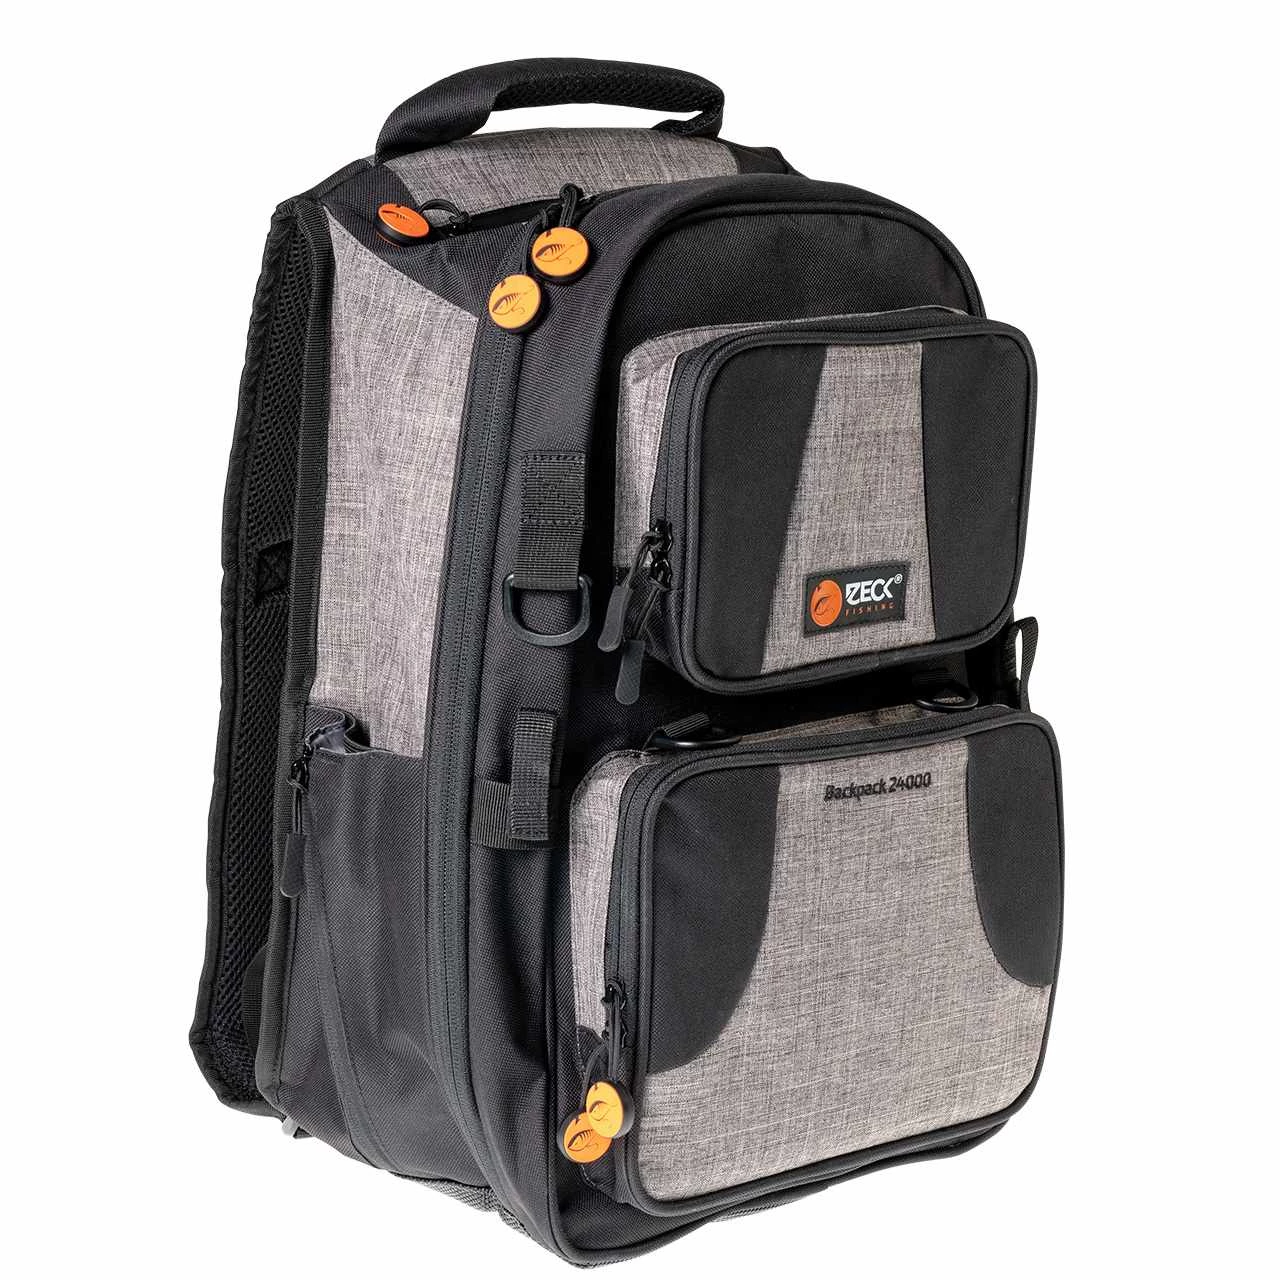 Zeck Backpack 24000 Schwarz Grau